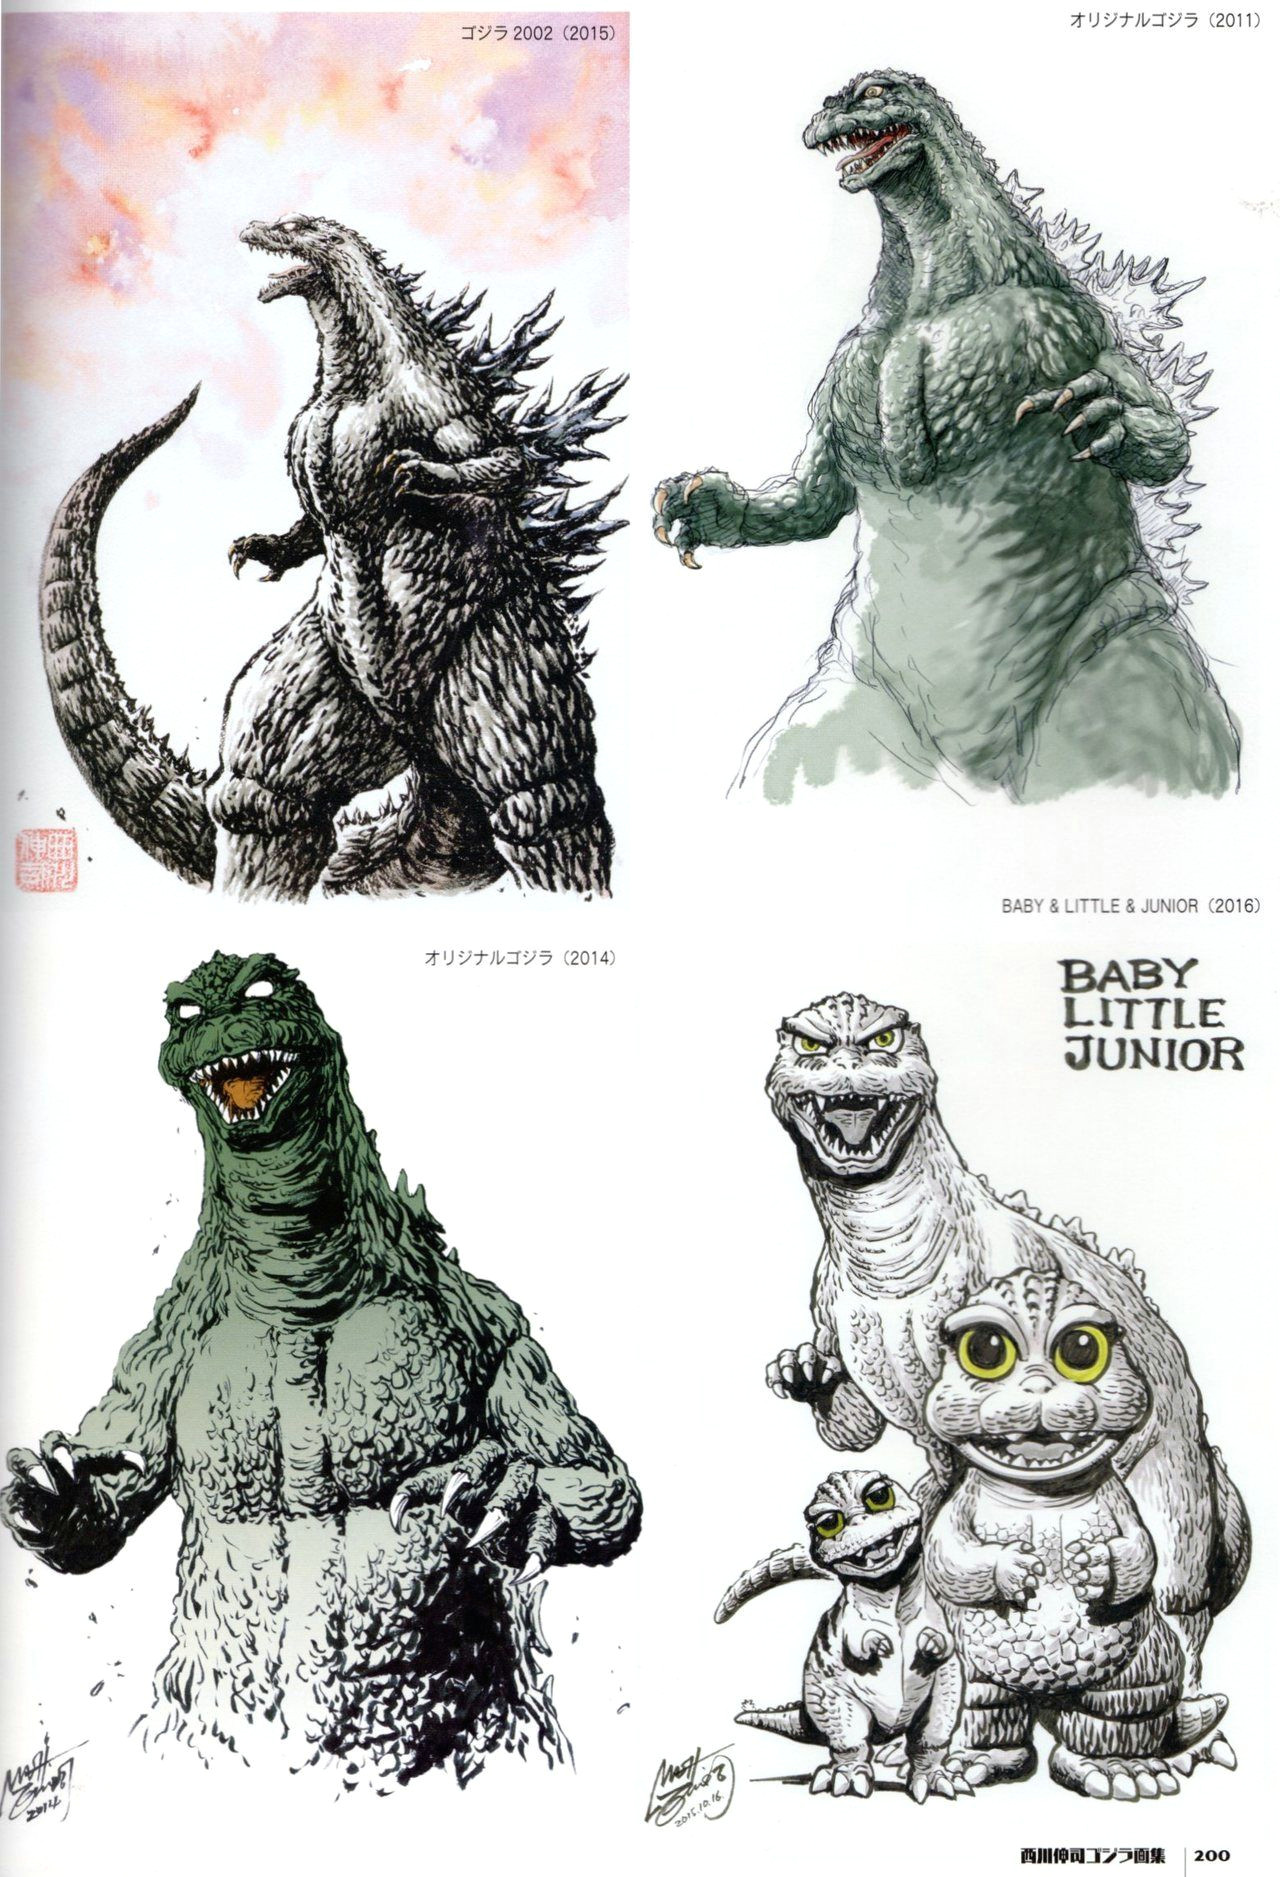 Godzilla Drawing Cartoons 2 Chernobog13 Various Drawing Of Godzilla and His Progeny by Shinji